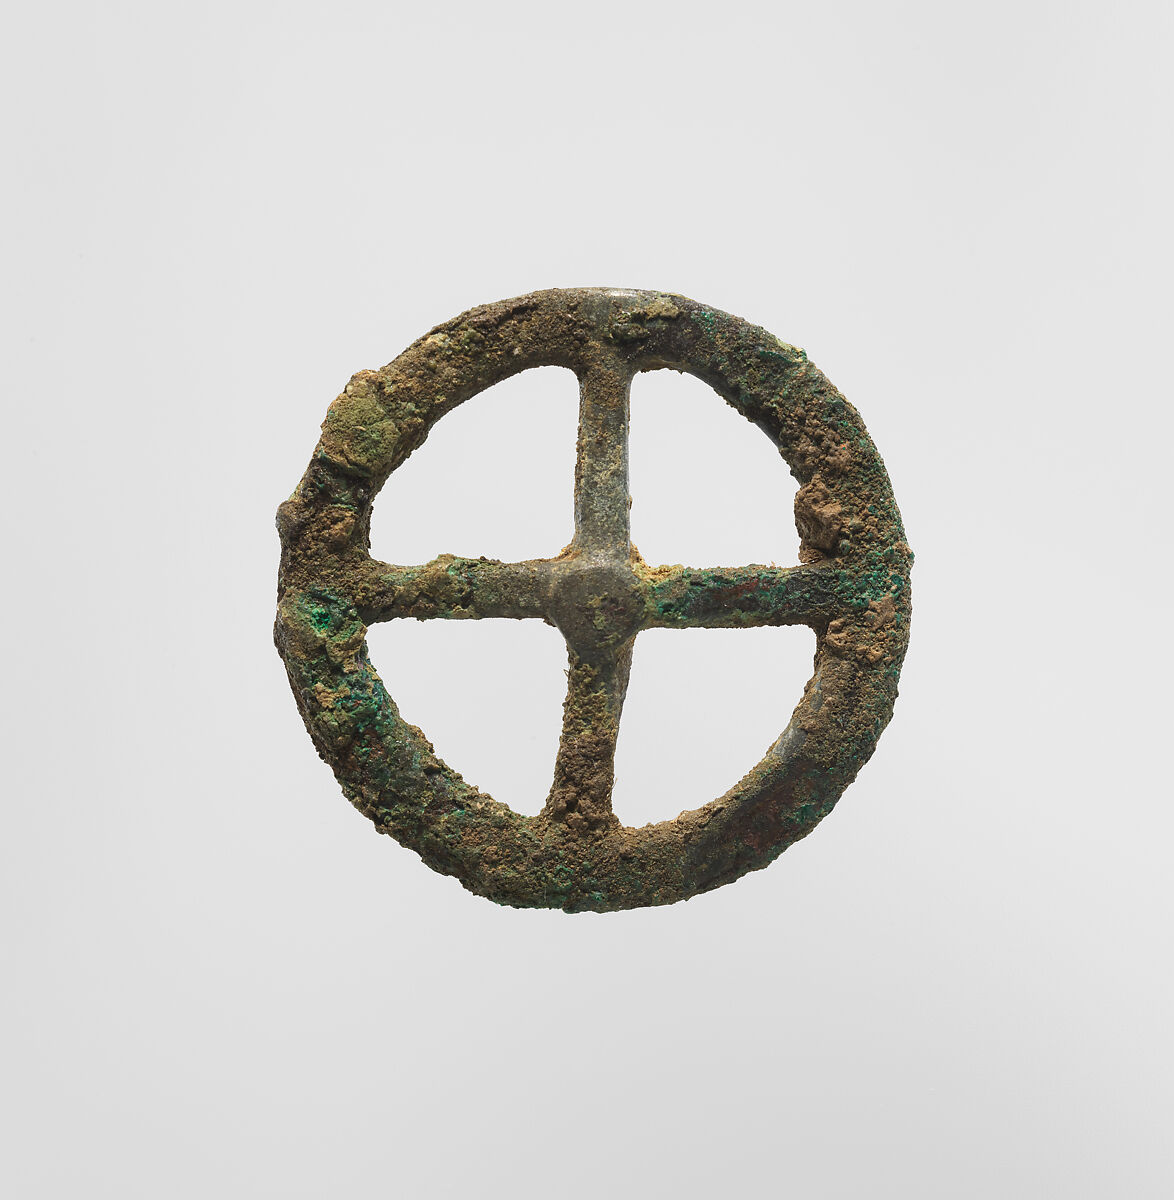 Four-Spoked Votive Wheel, Copper alloy, Roman 